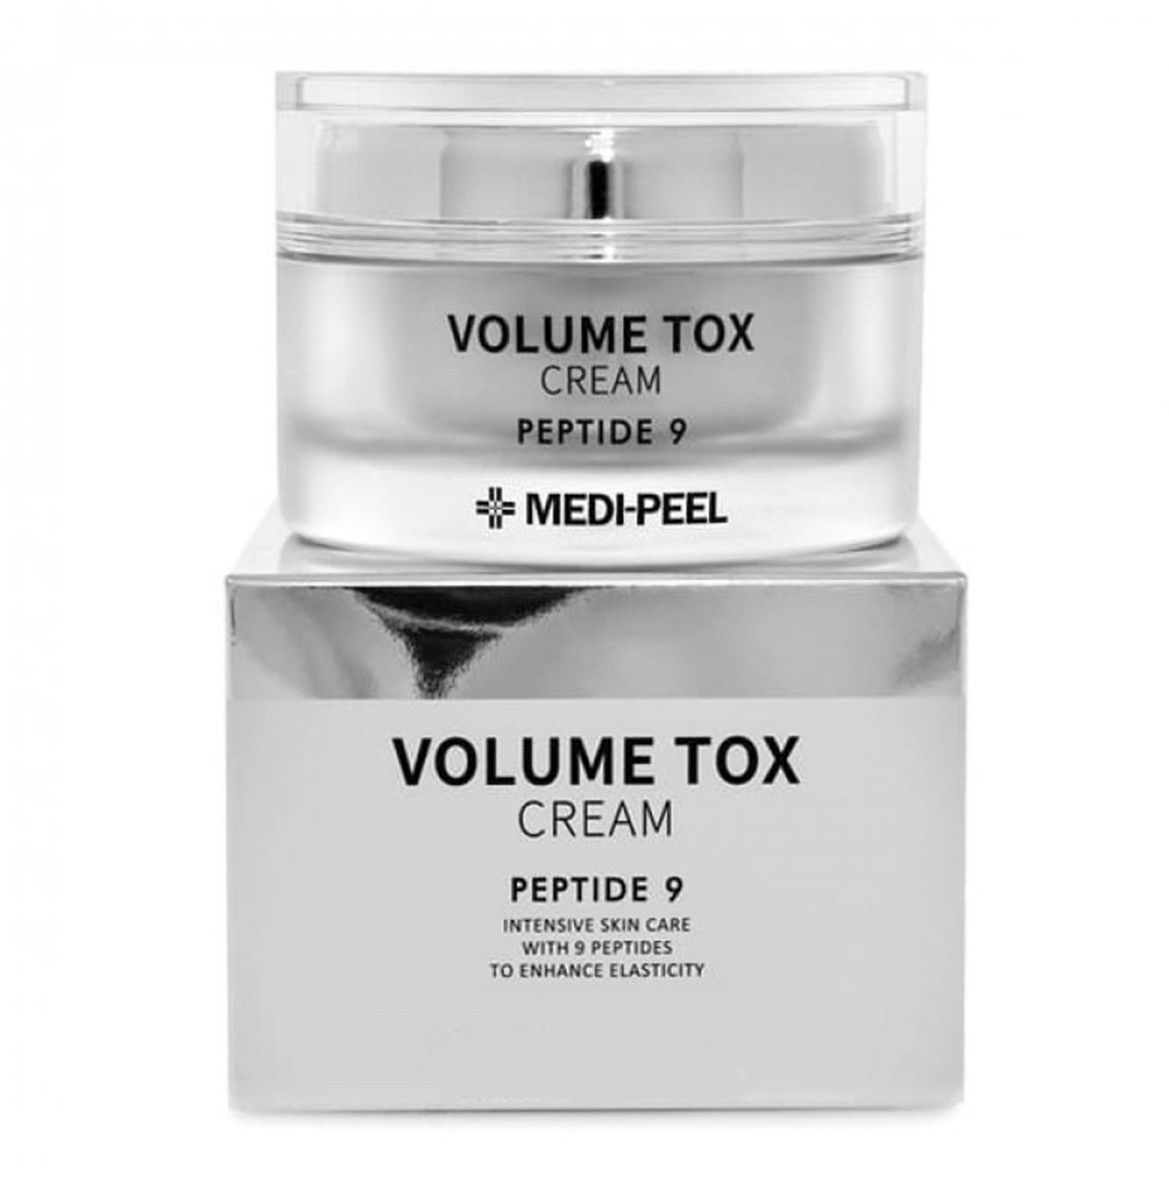 Medi peel peptide 9 volume tox отзывы. Volume Tox Cream Peptide 9 Medi-Peel. Medi-Peel Peptide 9 Volume Tox Cream (50g). Крем для лица Volume Tox 9 пептидов. Medi Peel 9 Peptide Cream.